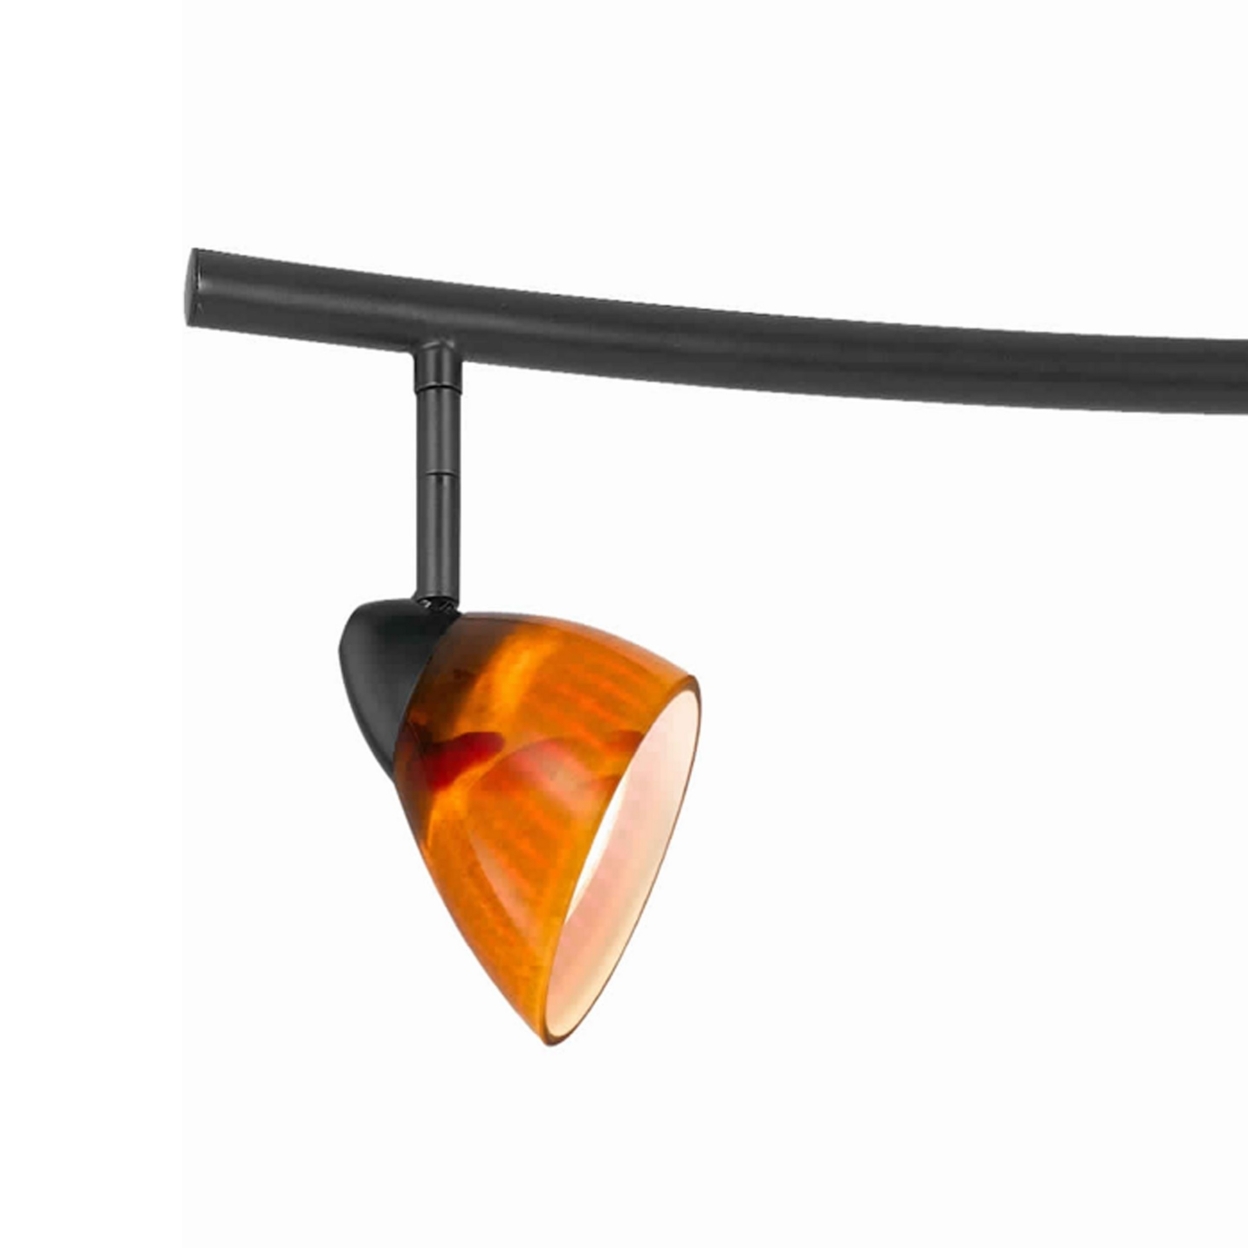 5 Light 120V Metal Track Light Fixture With Glass Shade, Black And Orange- Saltoro Sherpi